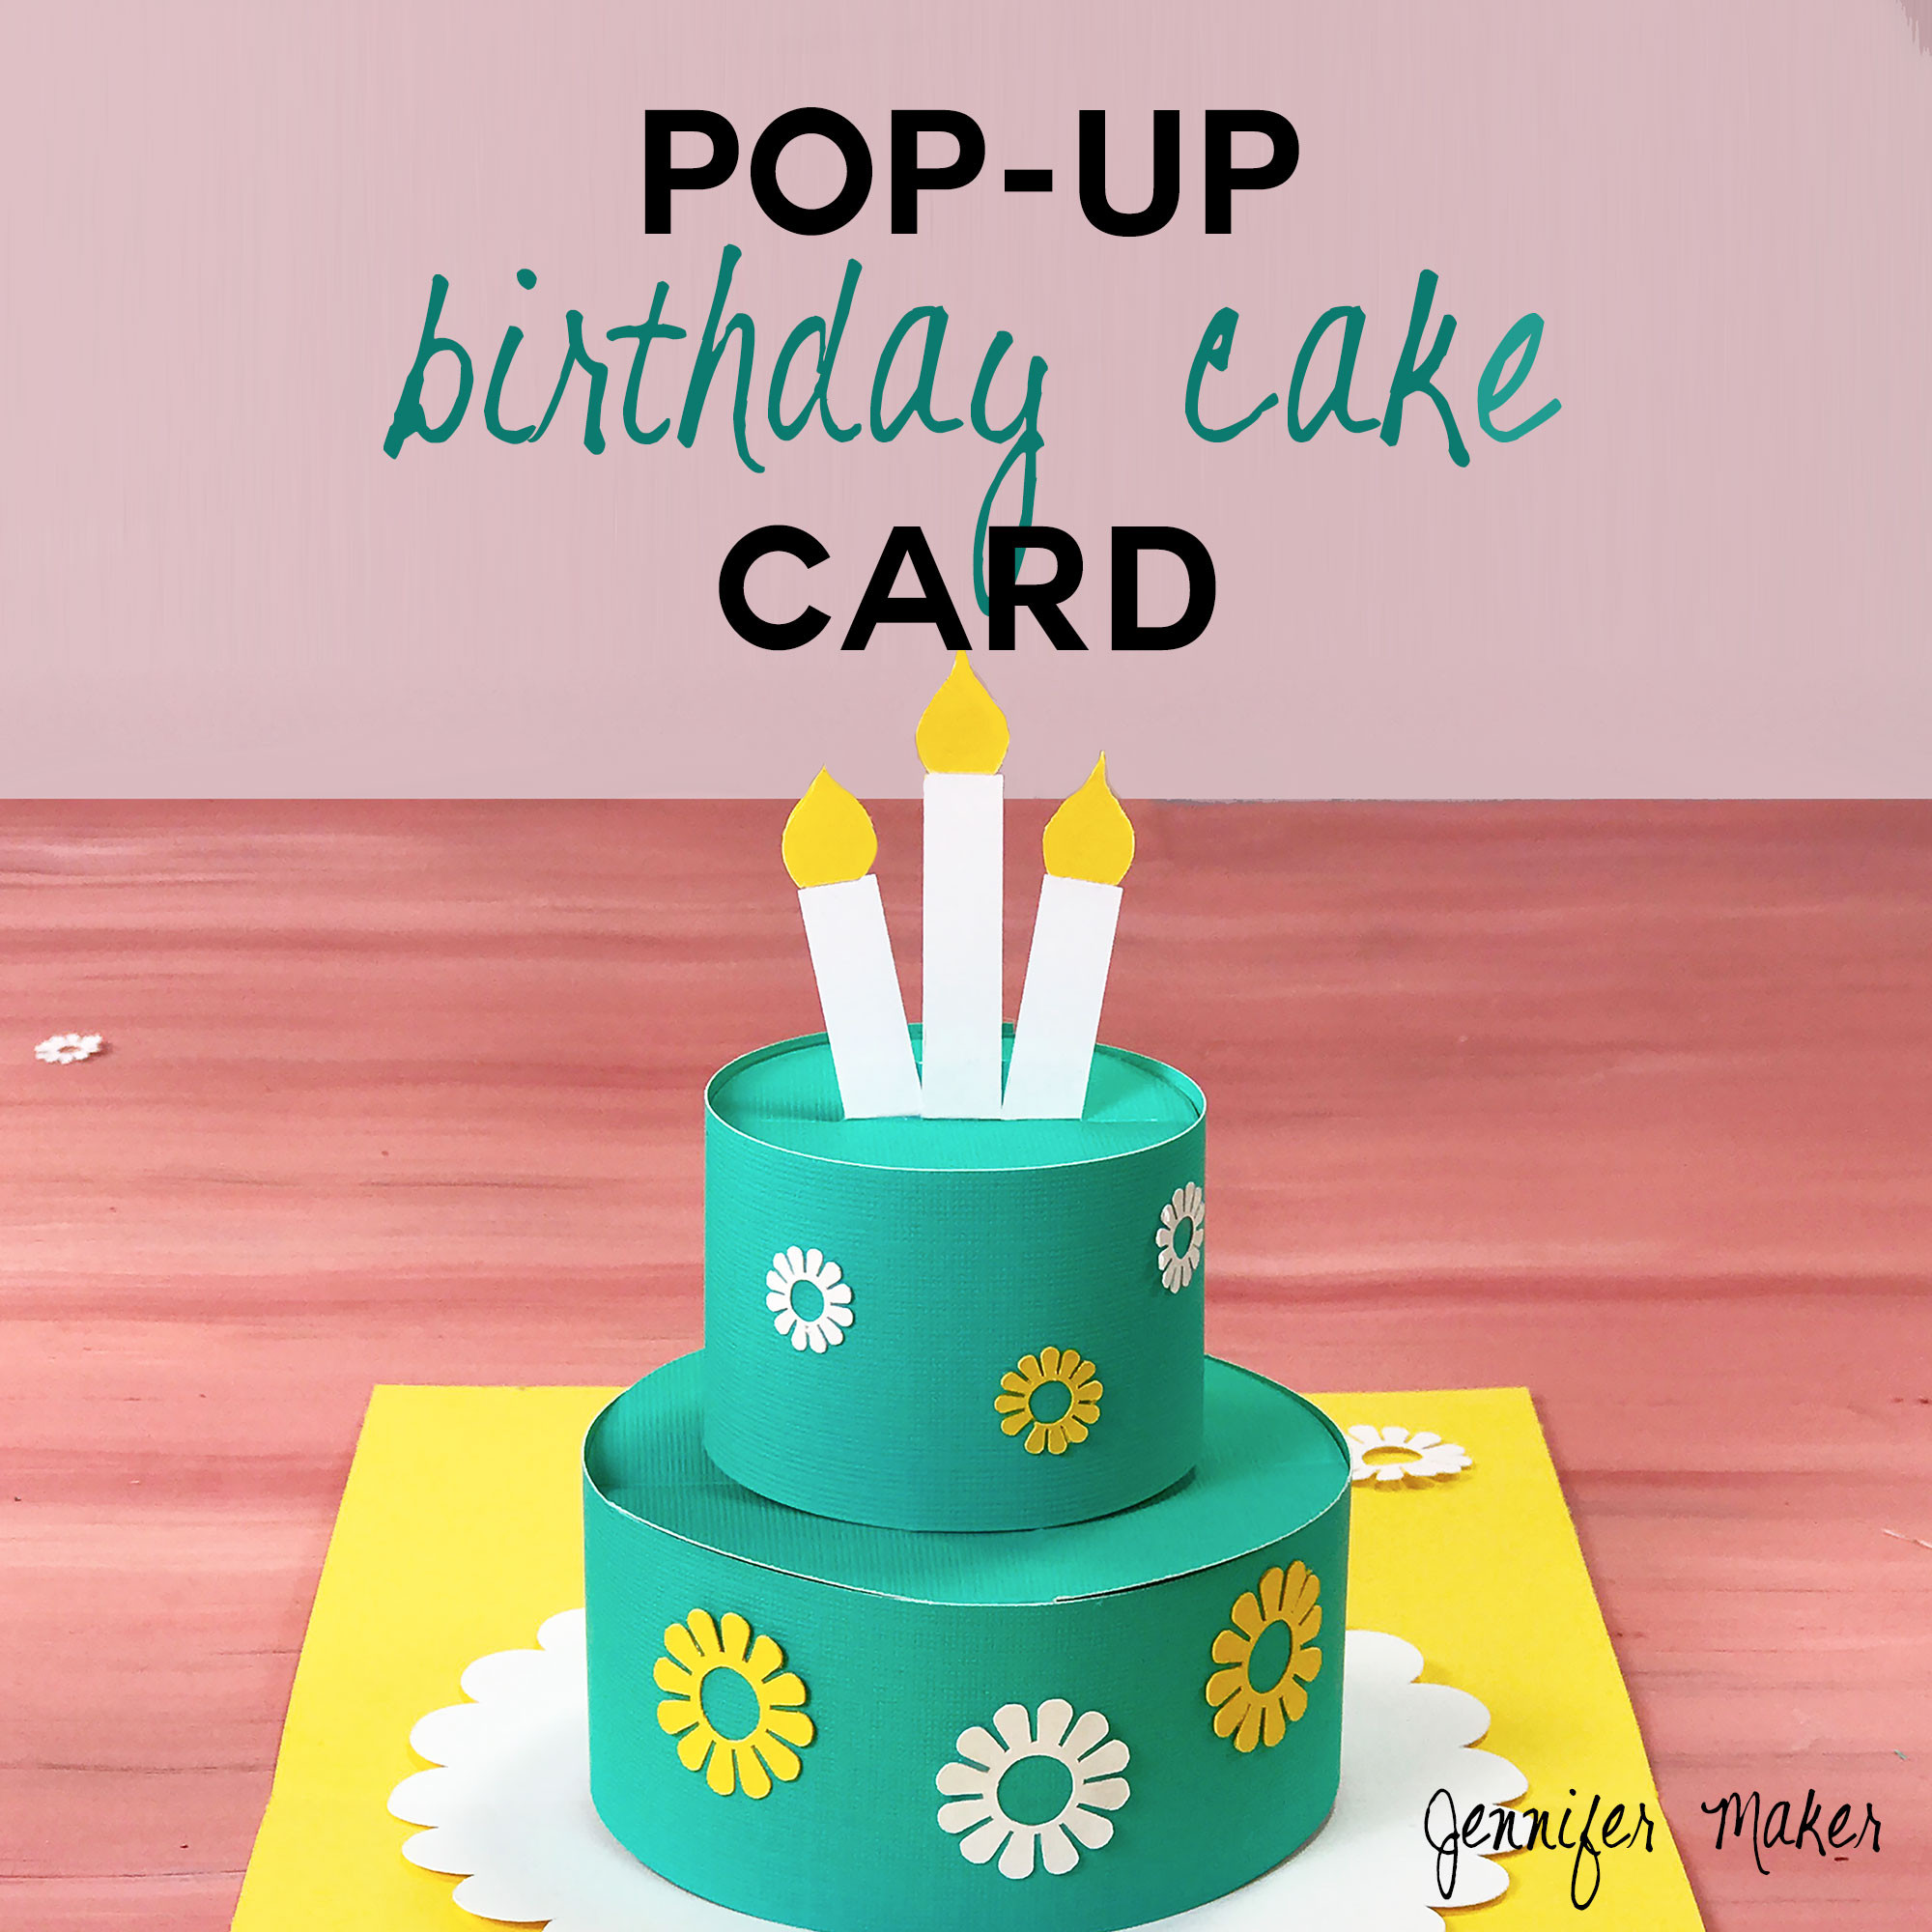 Birthday Cake Pop Up Card
 How to Make a Pop Up Birthday Cake Card Jennifer Maker